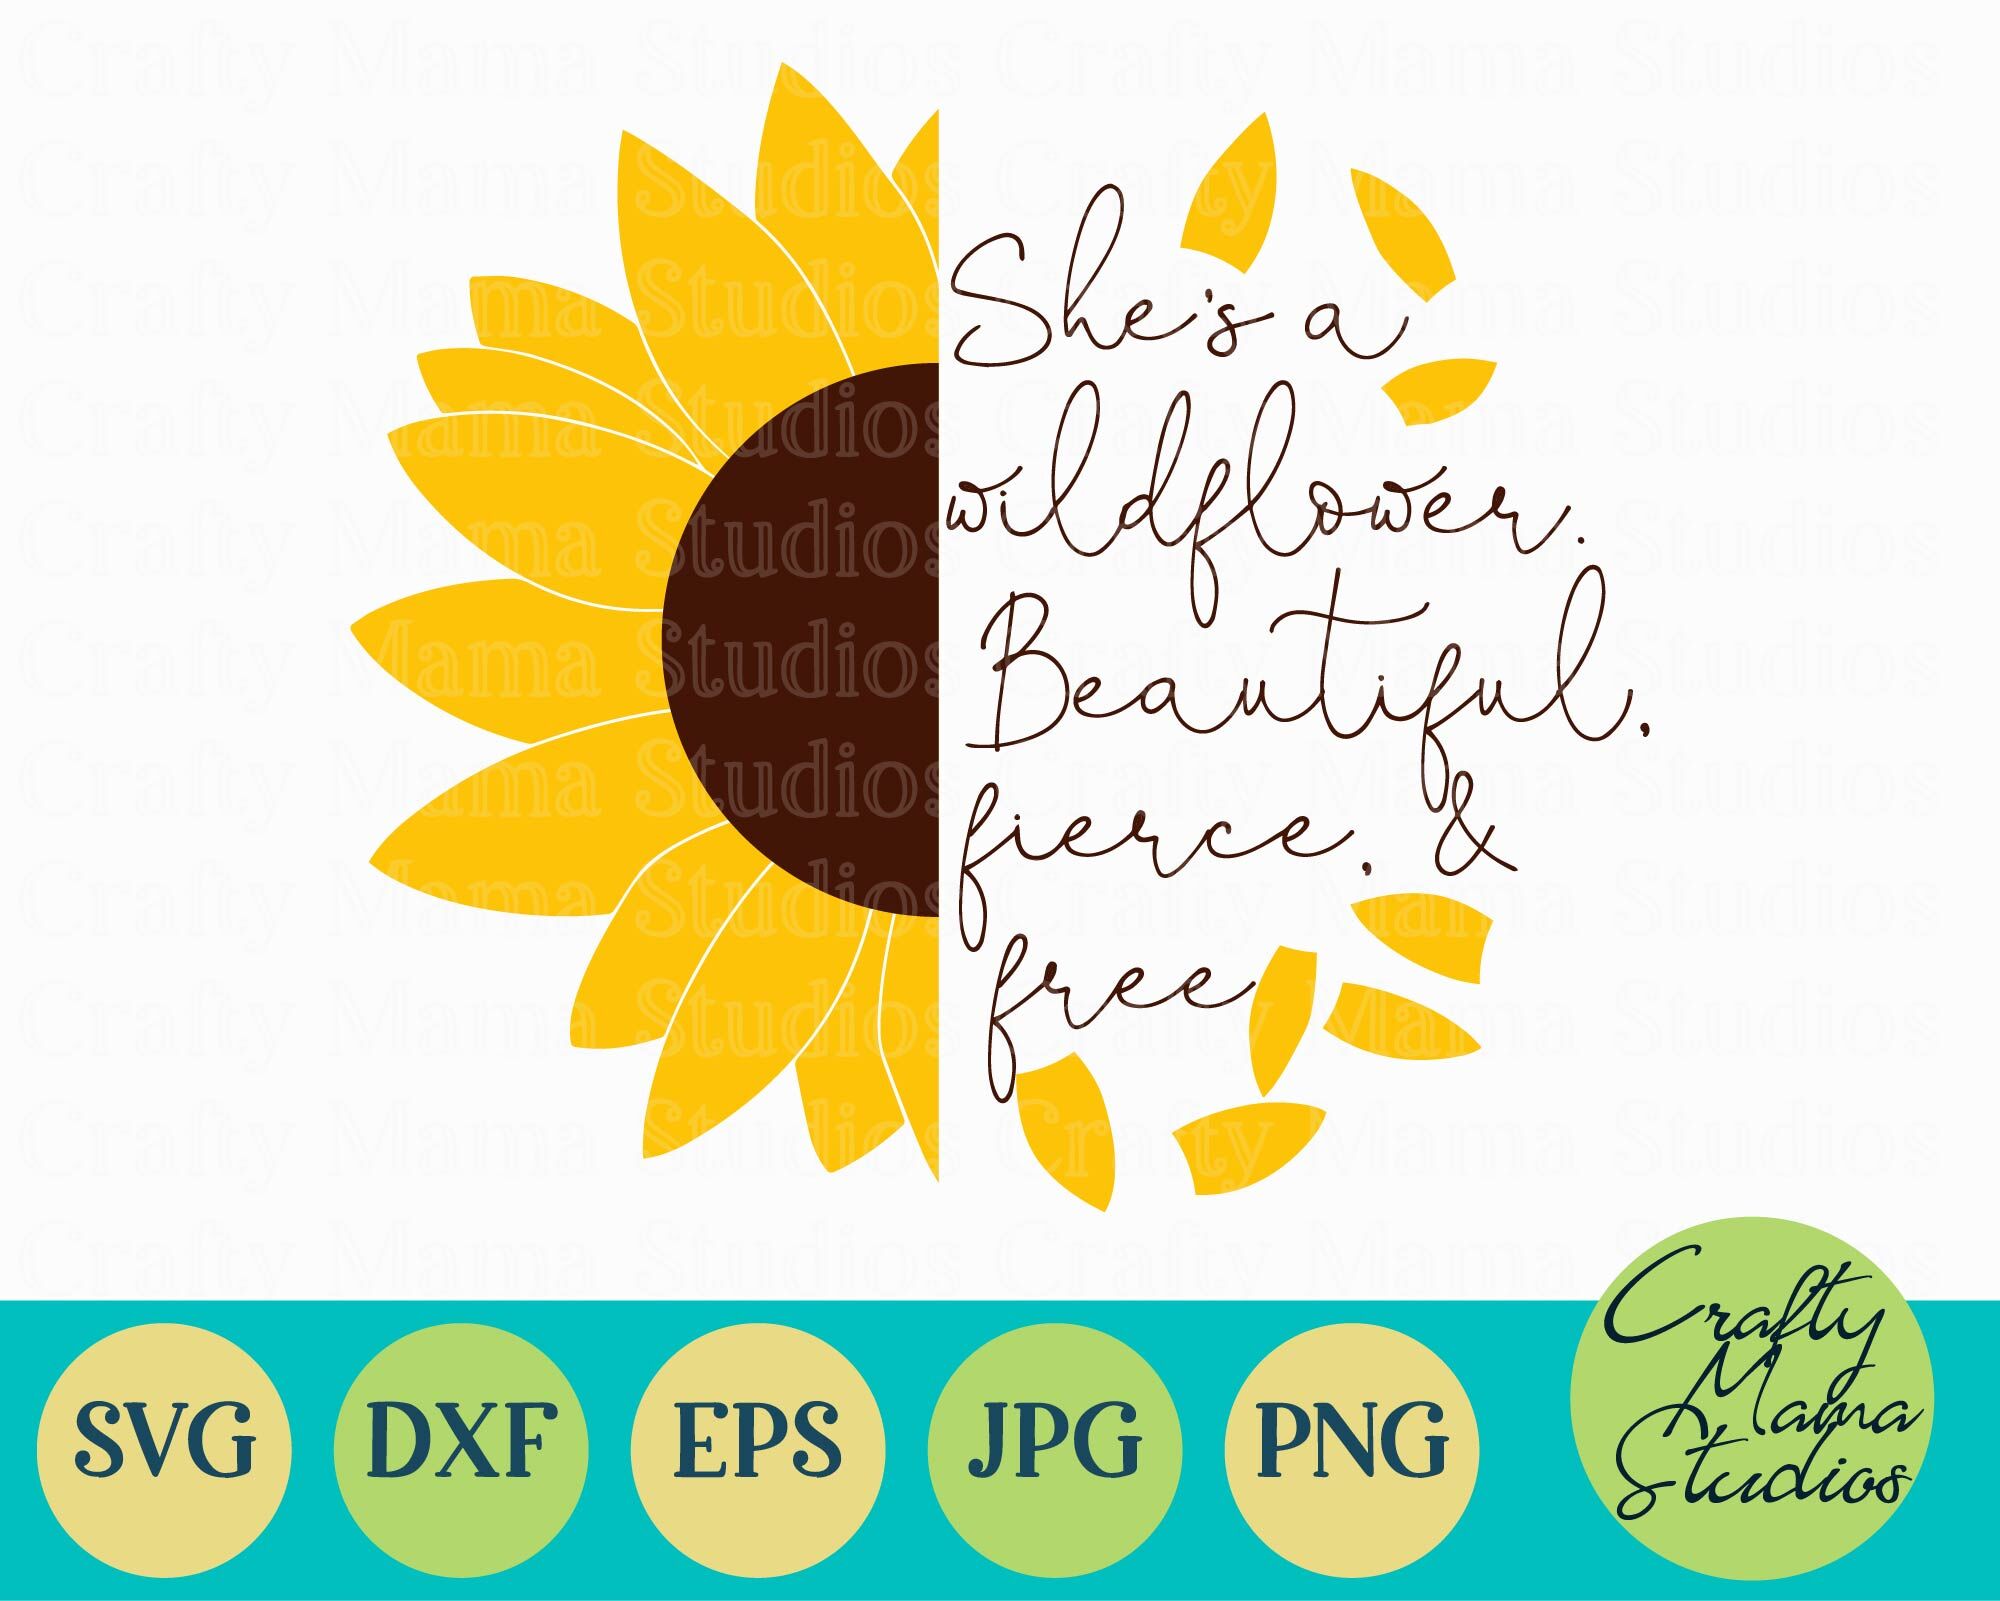 Download Free Svg Images Svg Cut Files And Transparent Png Free Sunflower Svg Images